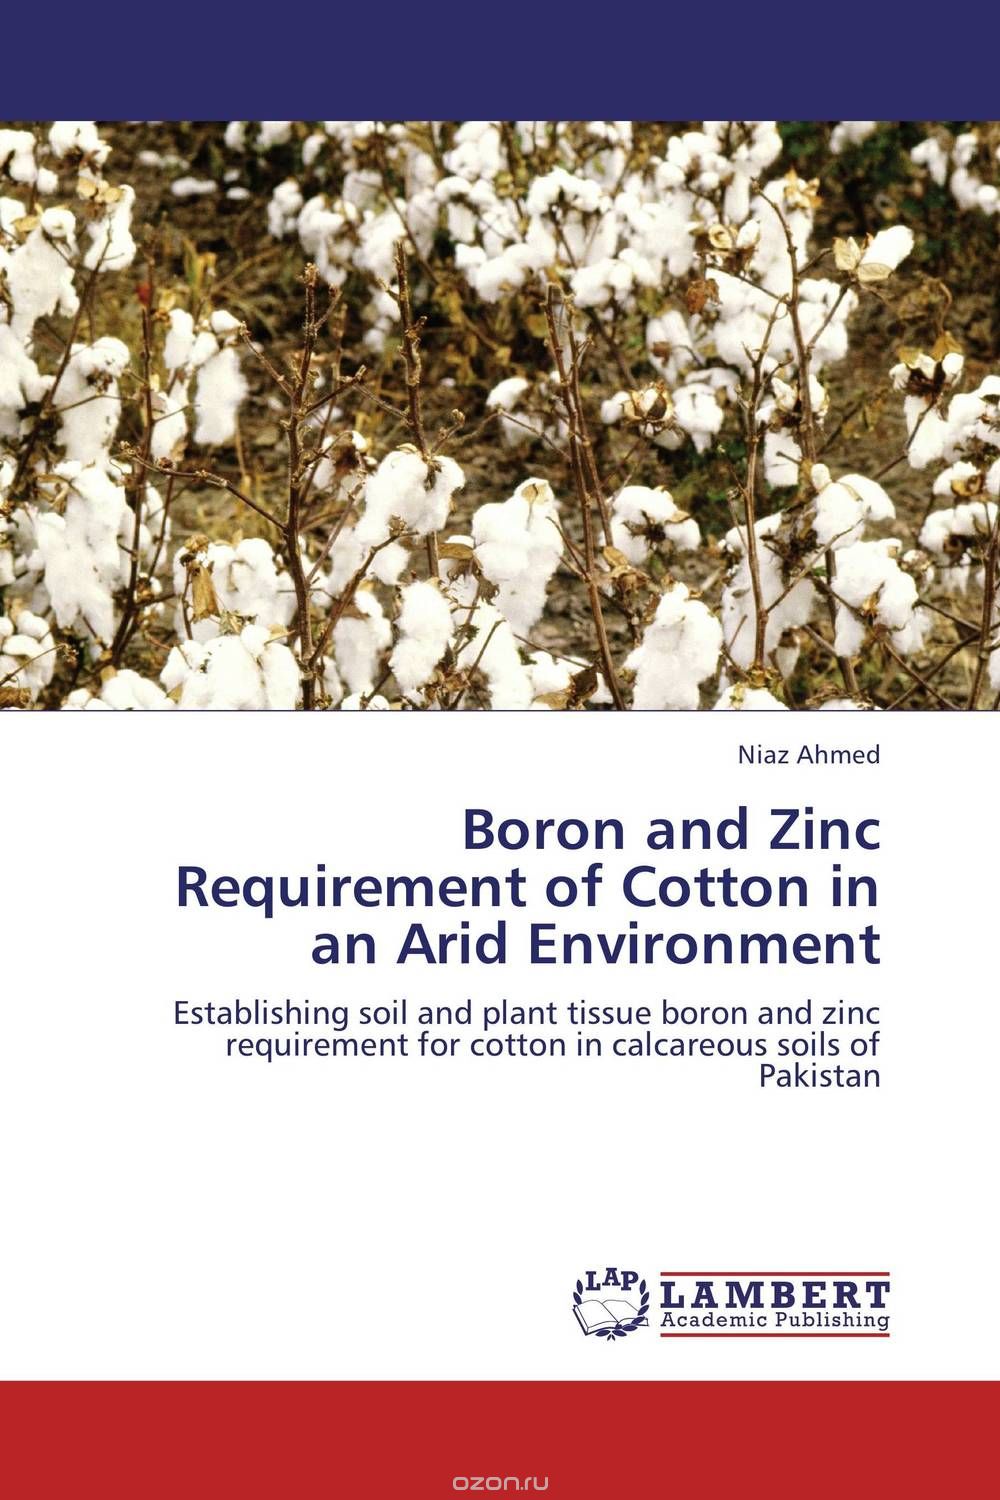 Скачать книгу "Boron and Zinc Requirement of Cotton in an Arid Environment"